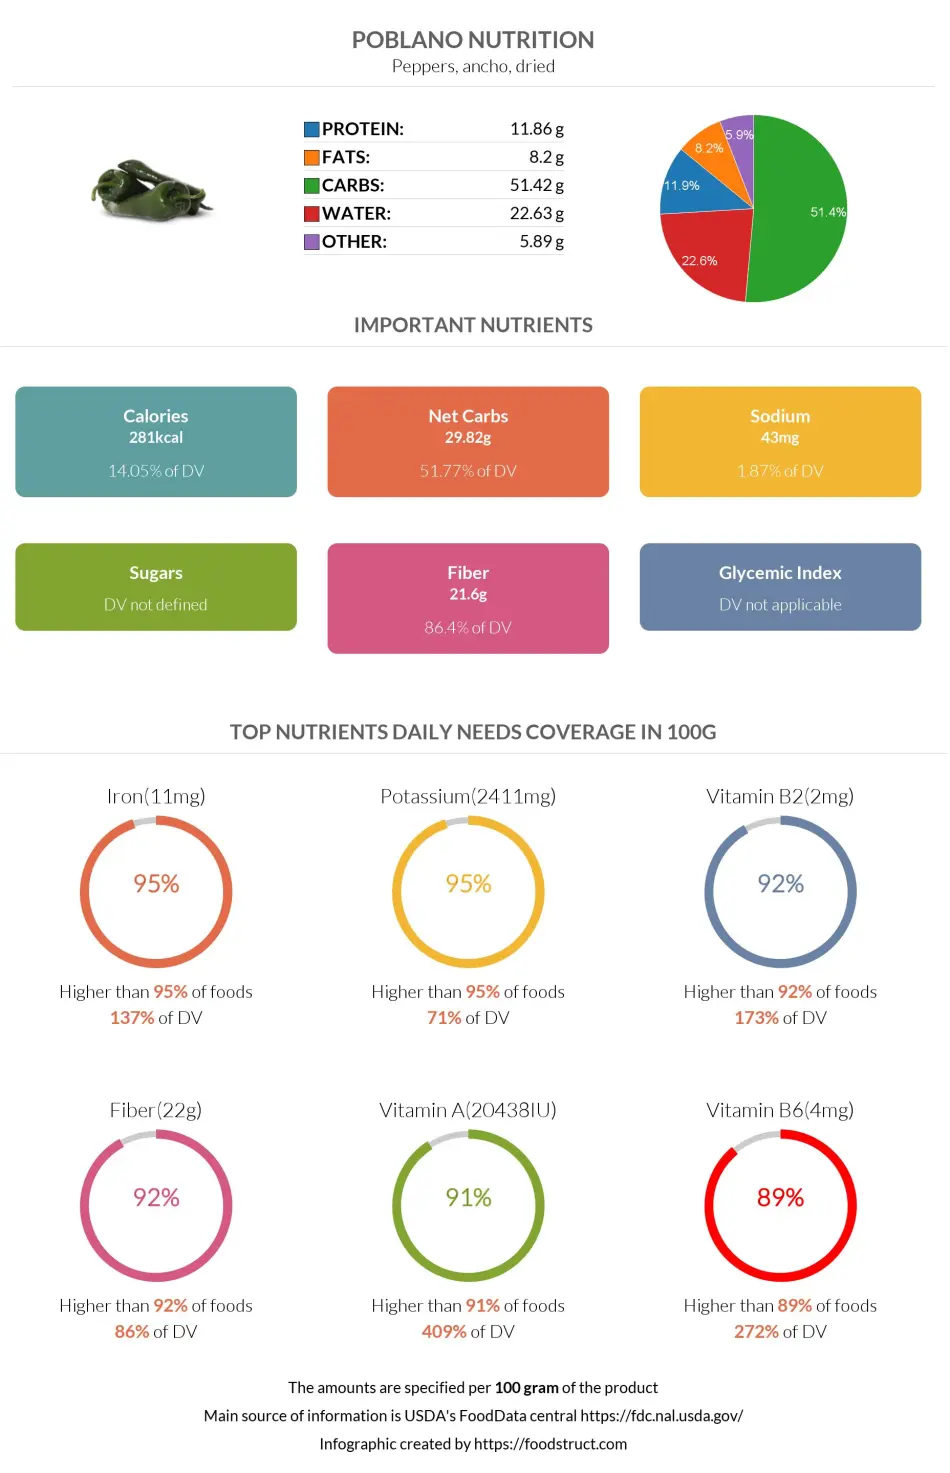 Poblano nutrition infographic